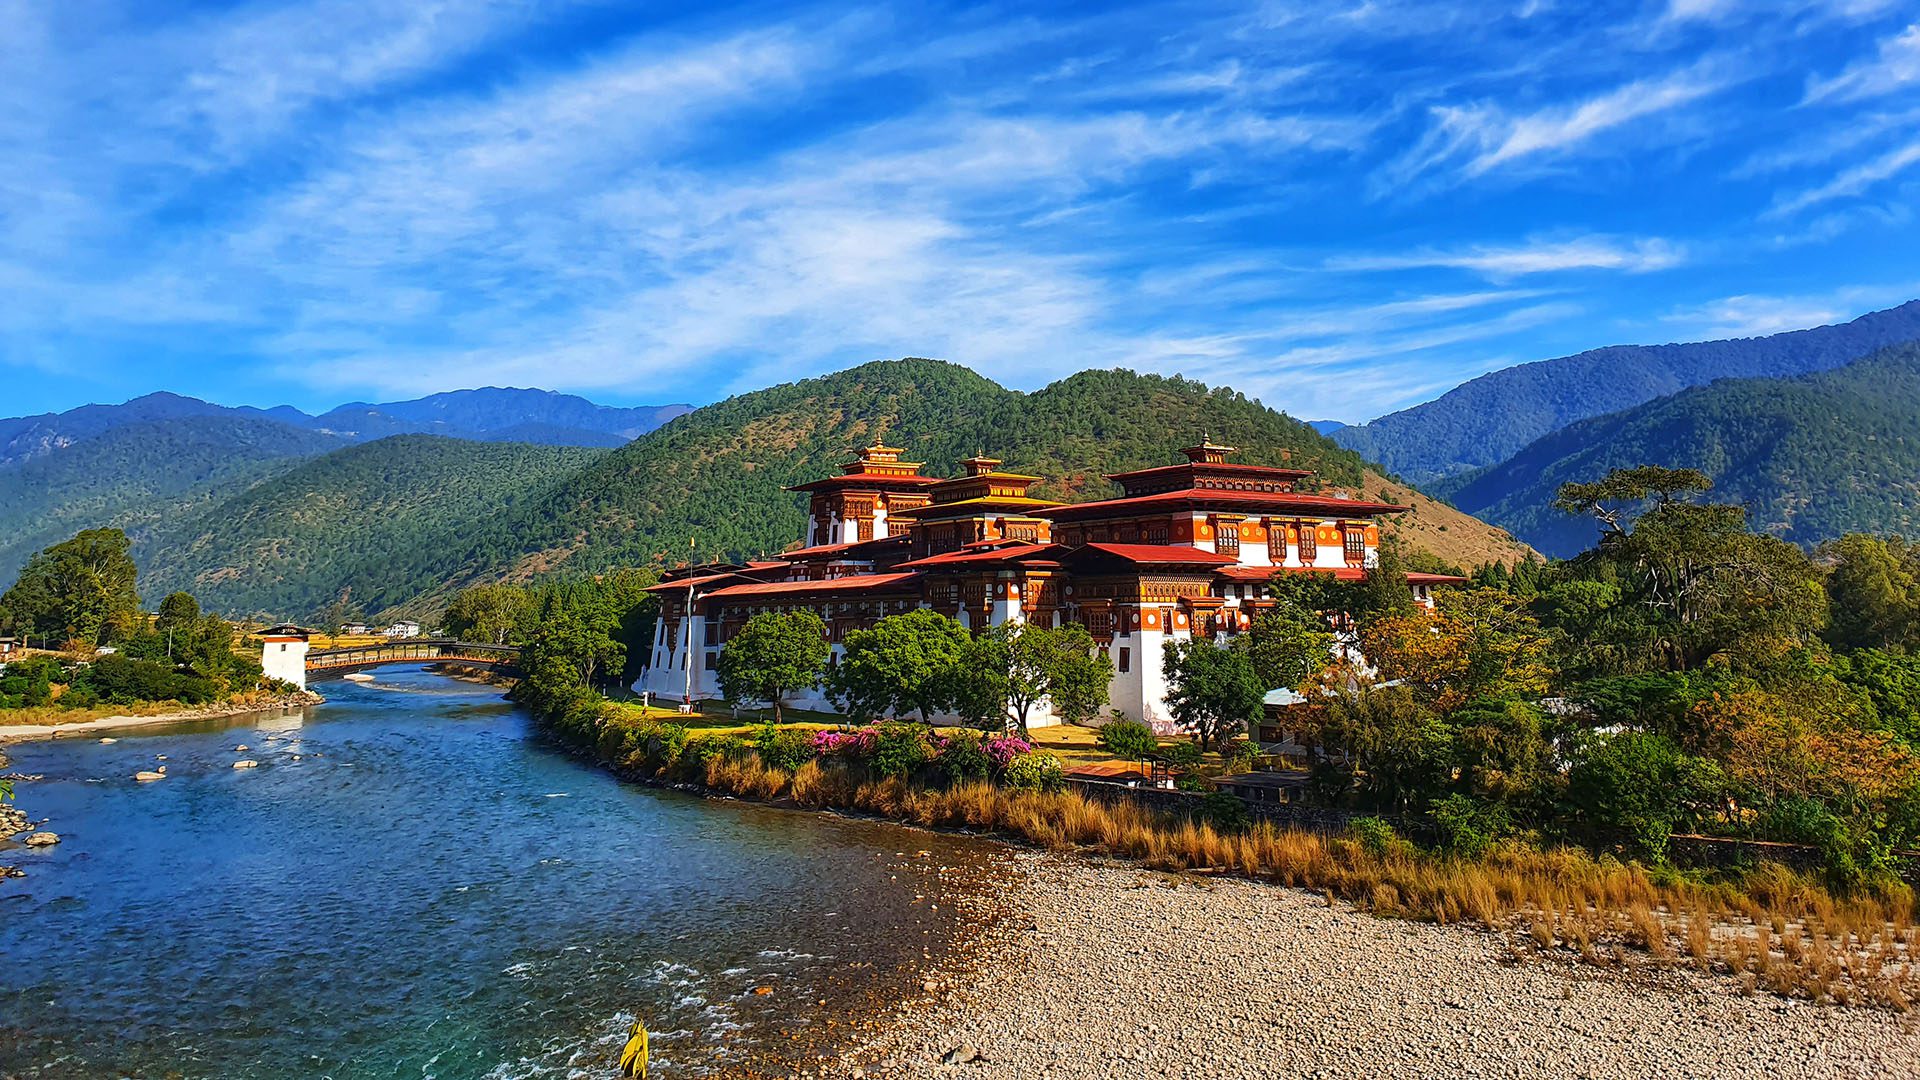 Trans Bhutan Trail: Experience the beauty & culture of Bhutan